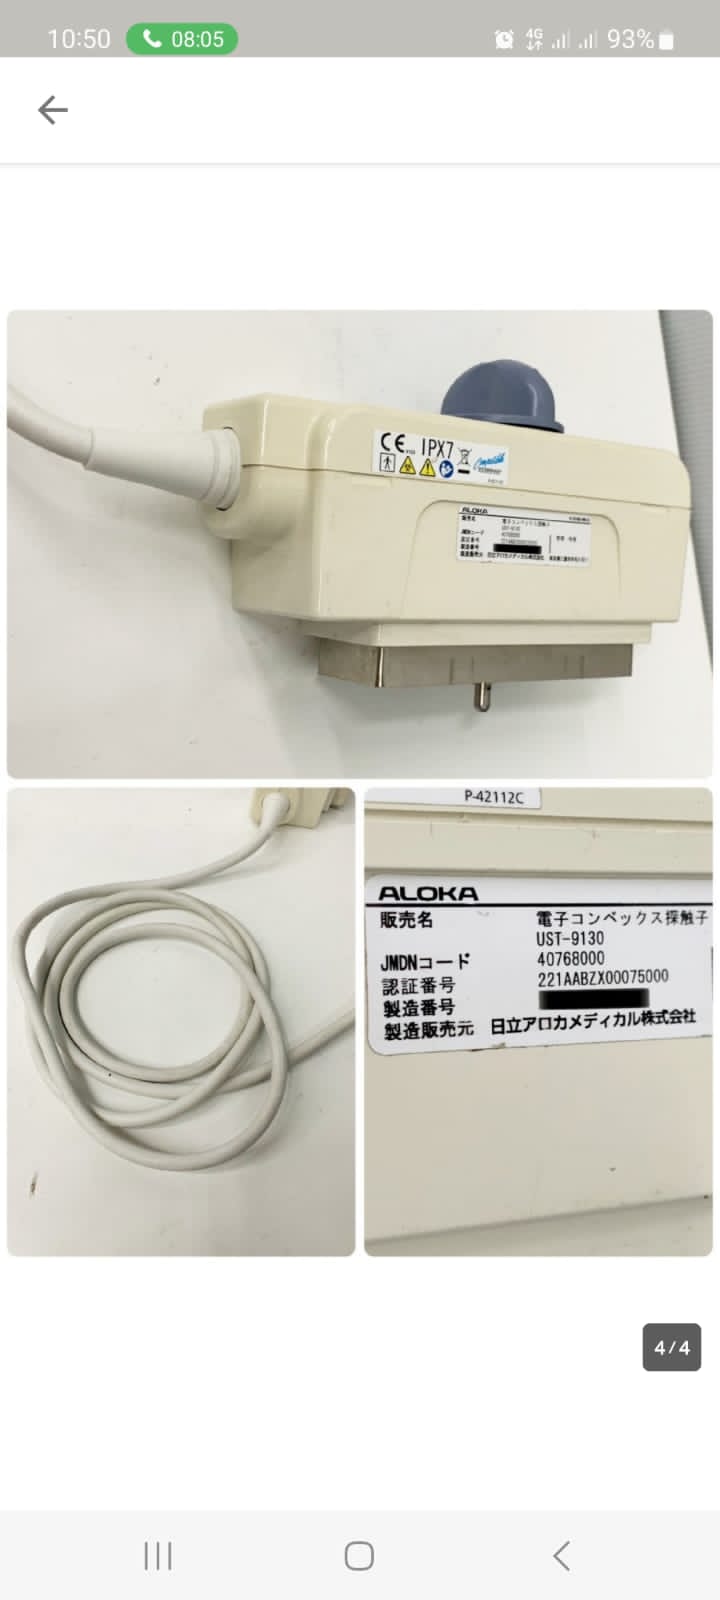 Aloka UST-9130 Abdominal Convex Transducer, Probe - Japan Medical Company LTD